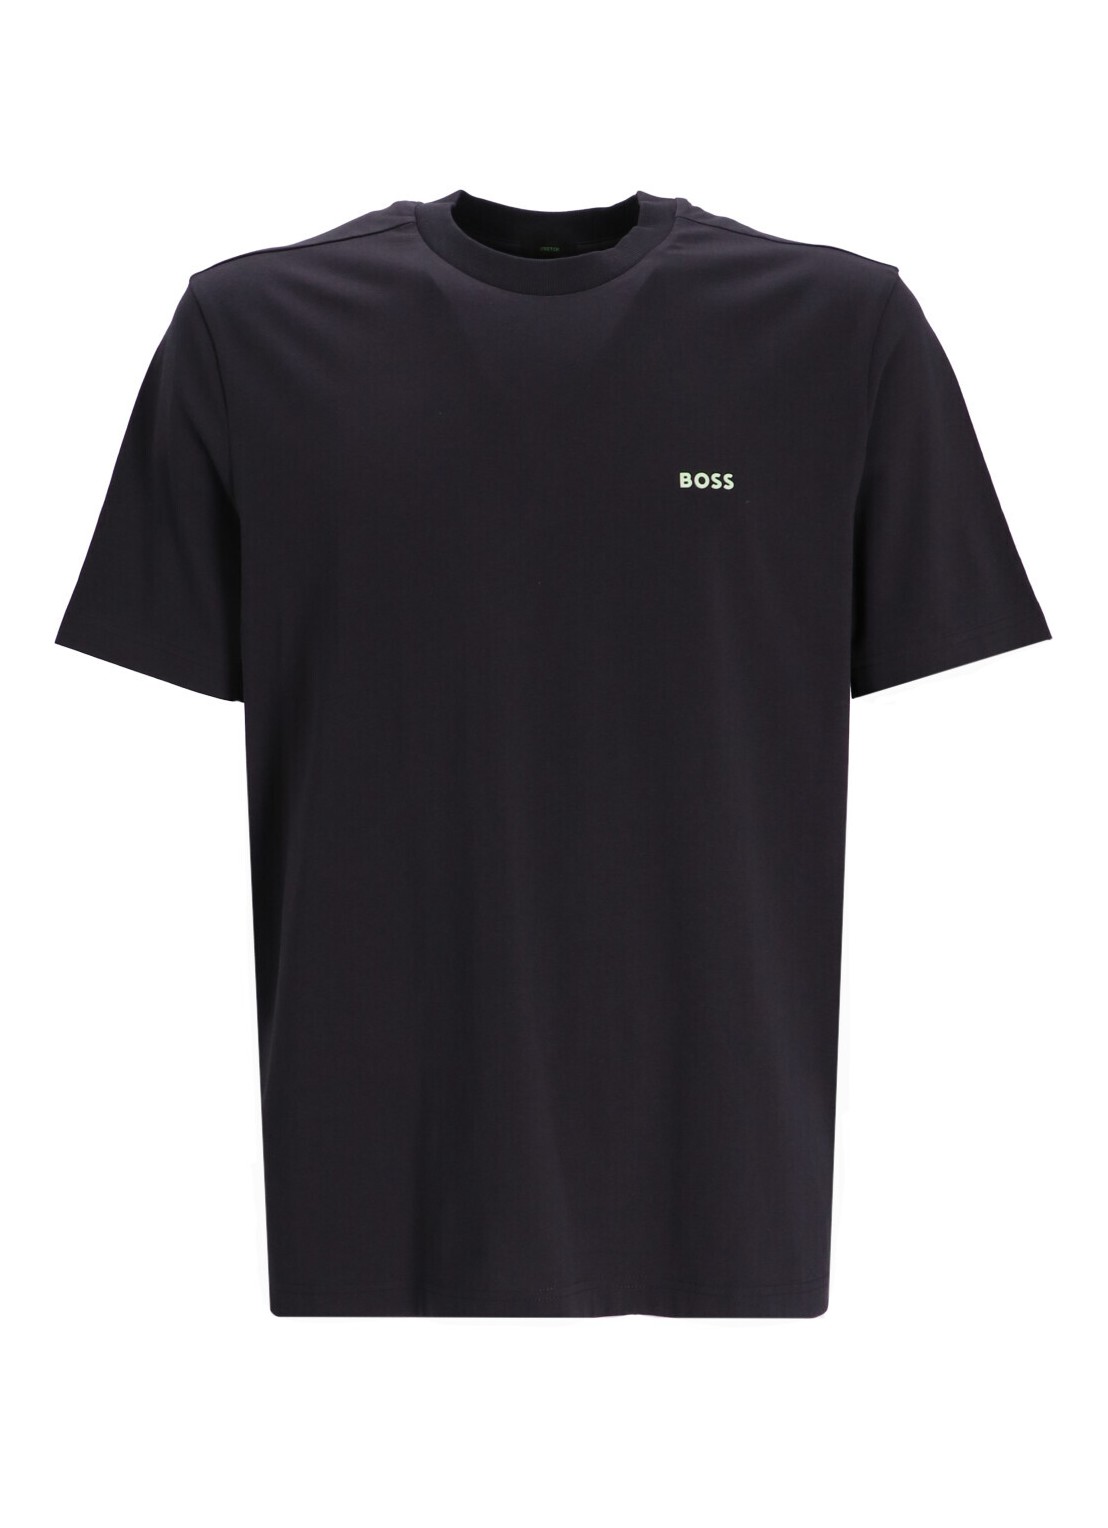 Camiseta boss t-shirt mantee - 50506373 016 talla 3XL
 